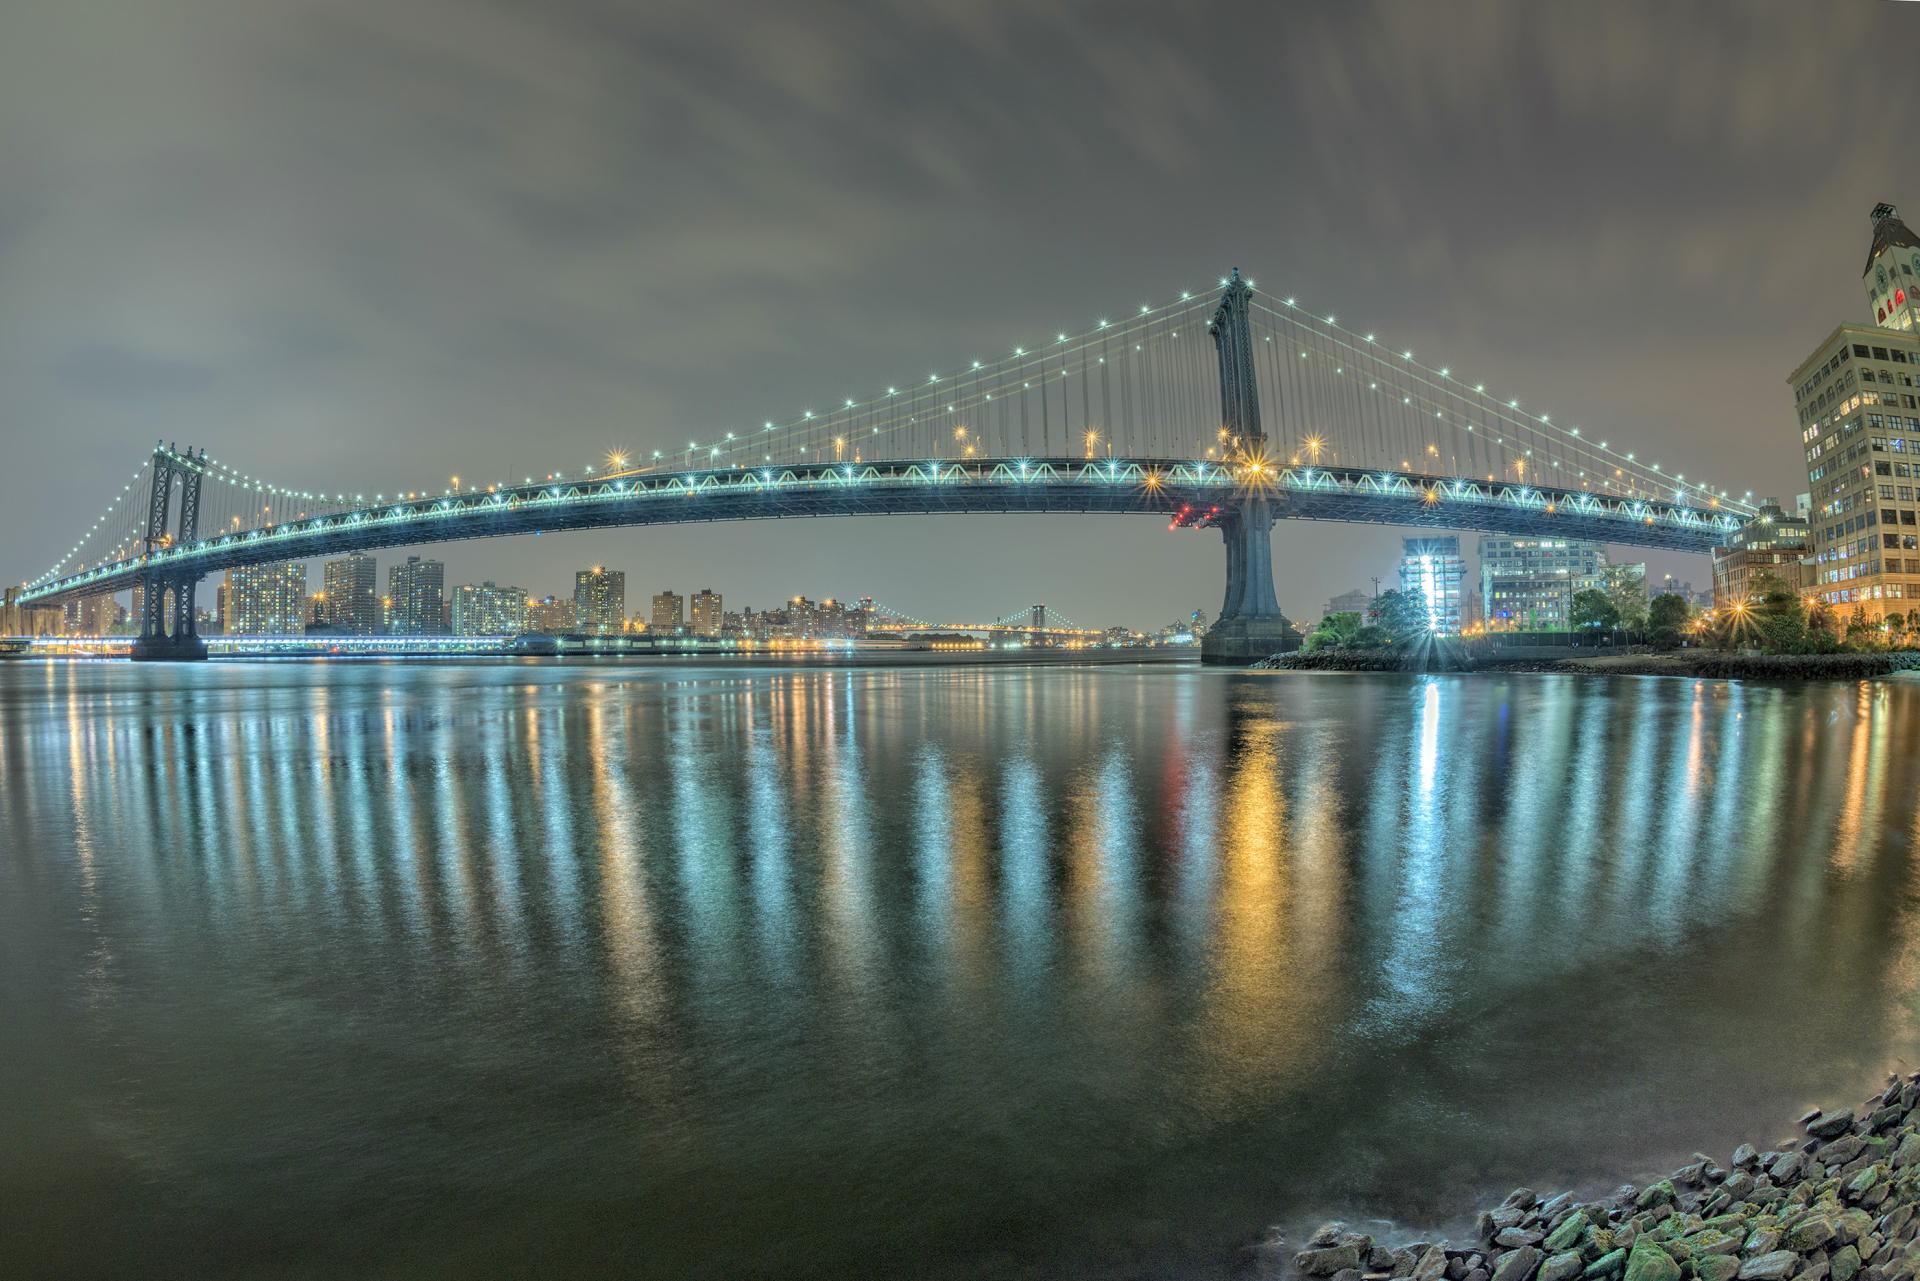 New York Photography Awards Winner - Manhattan Bridge